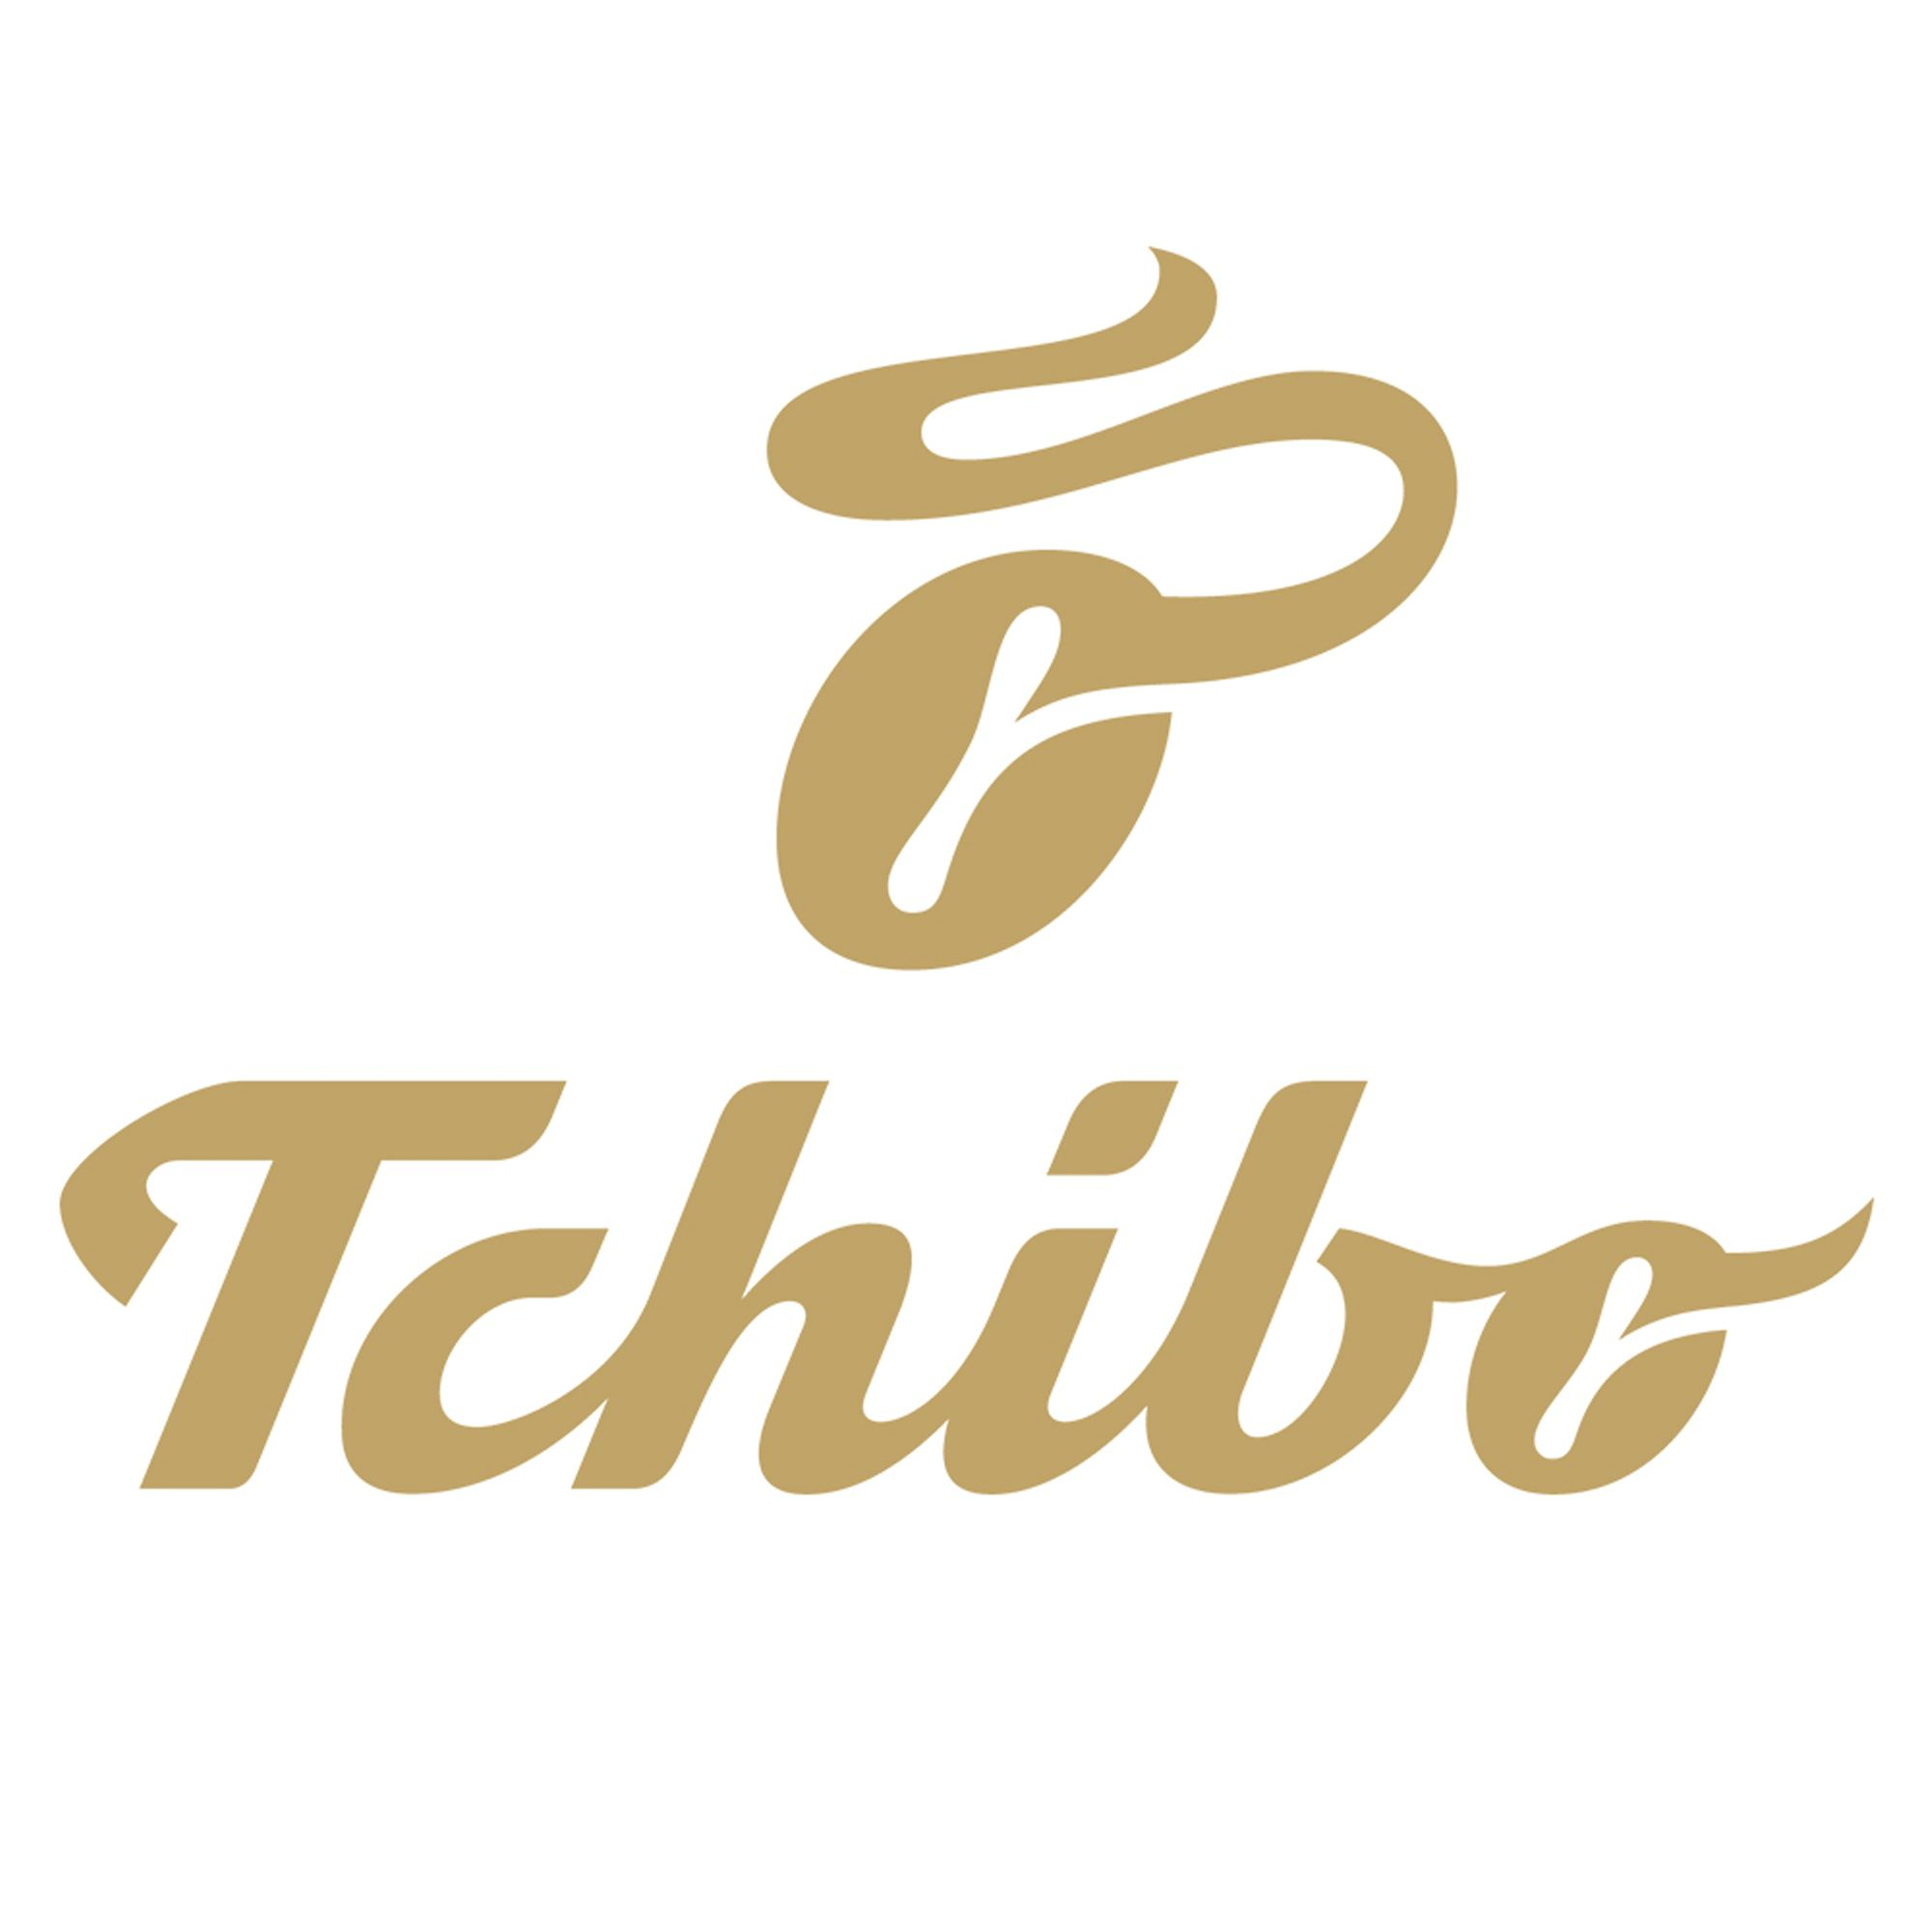 TCHIBO QBO 525780 Espresso Cafezinho Kapselsystem) (Tchibo Stück do Brasil Kaffeekapseln Qbo 27